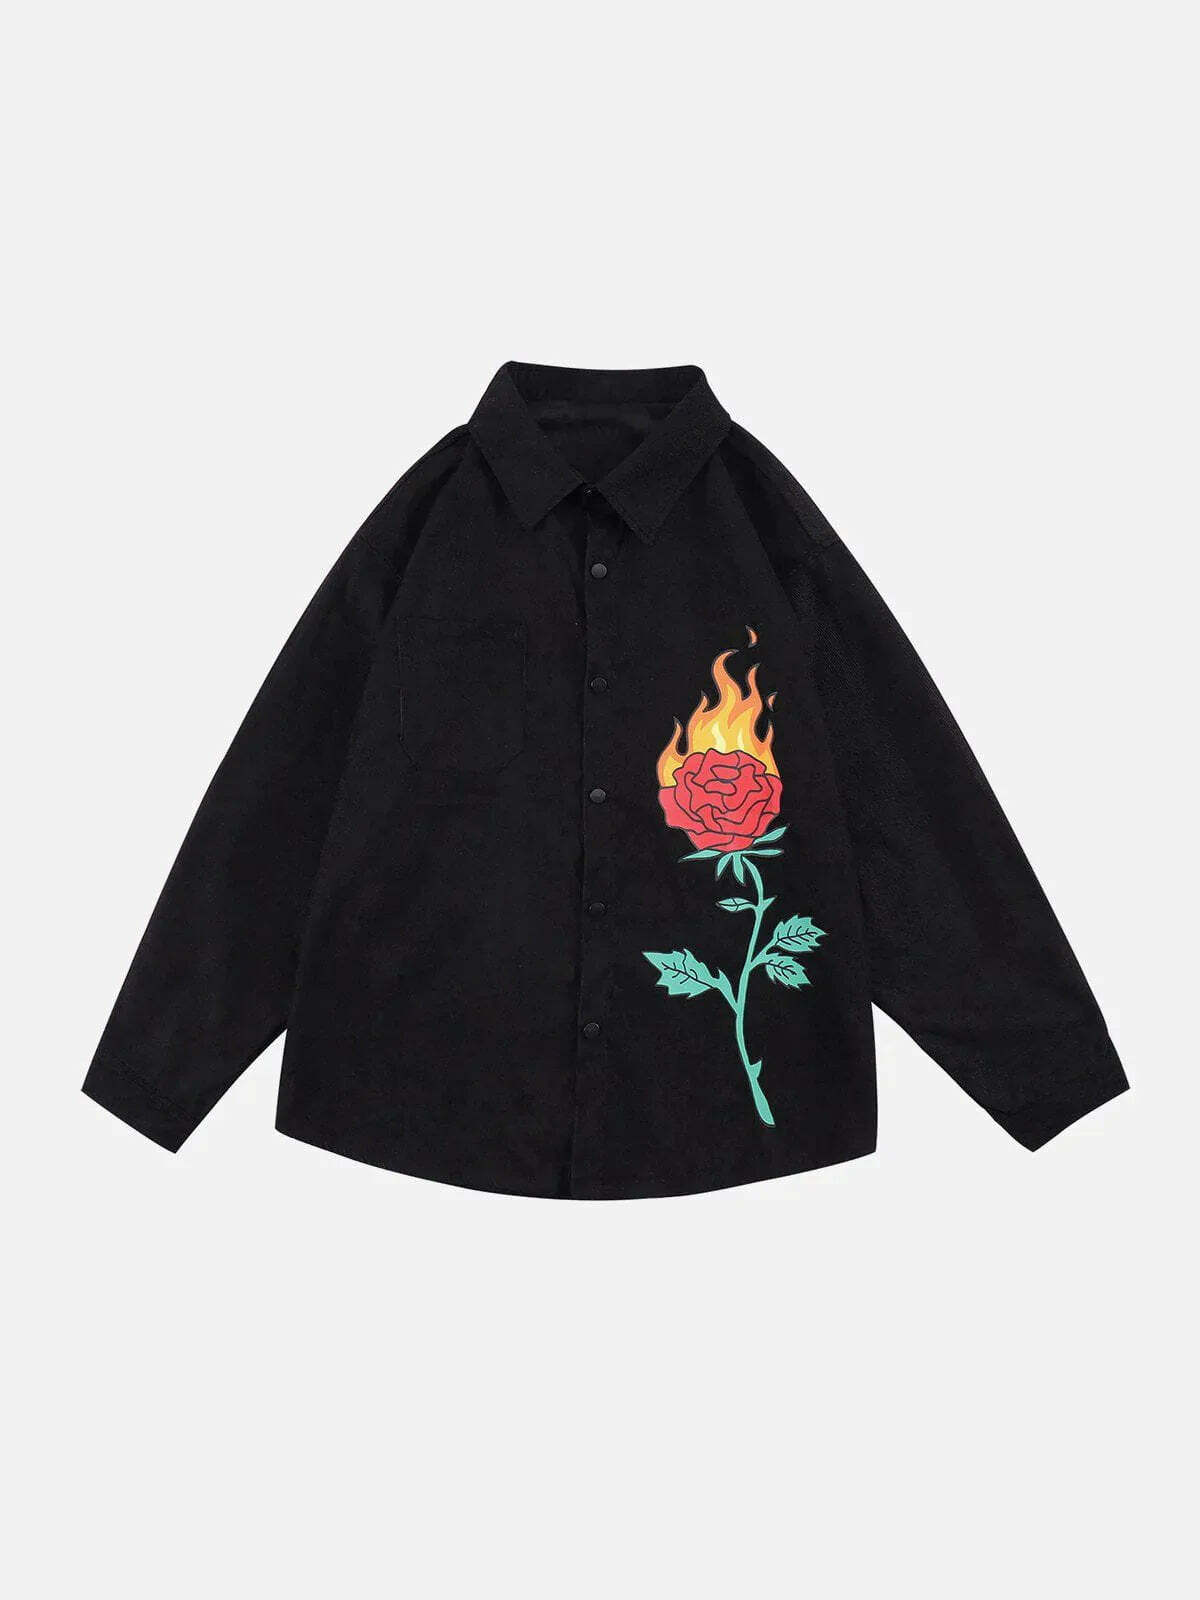 flame rose print shirt edgy & vibrant streetwear 3787